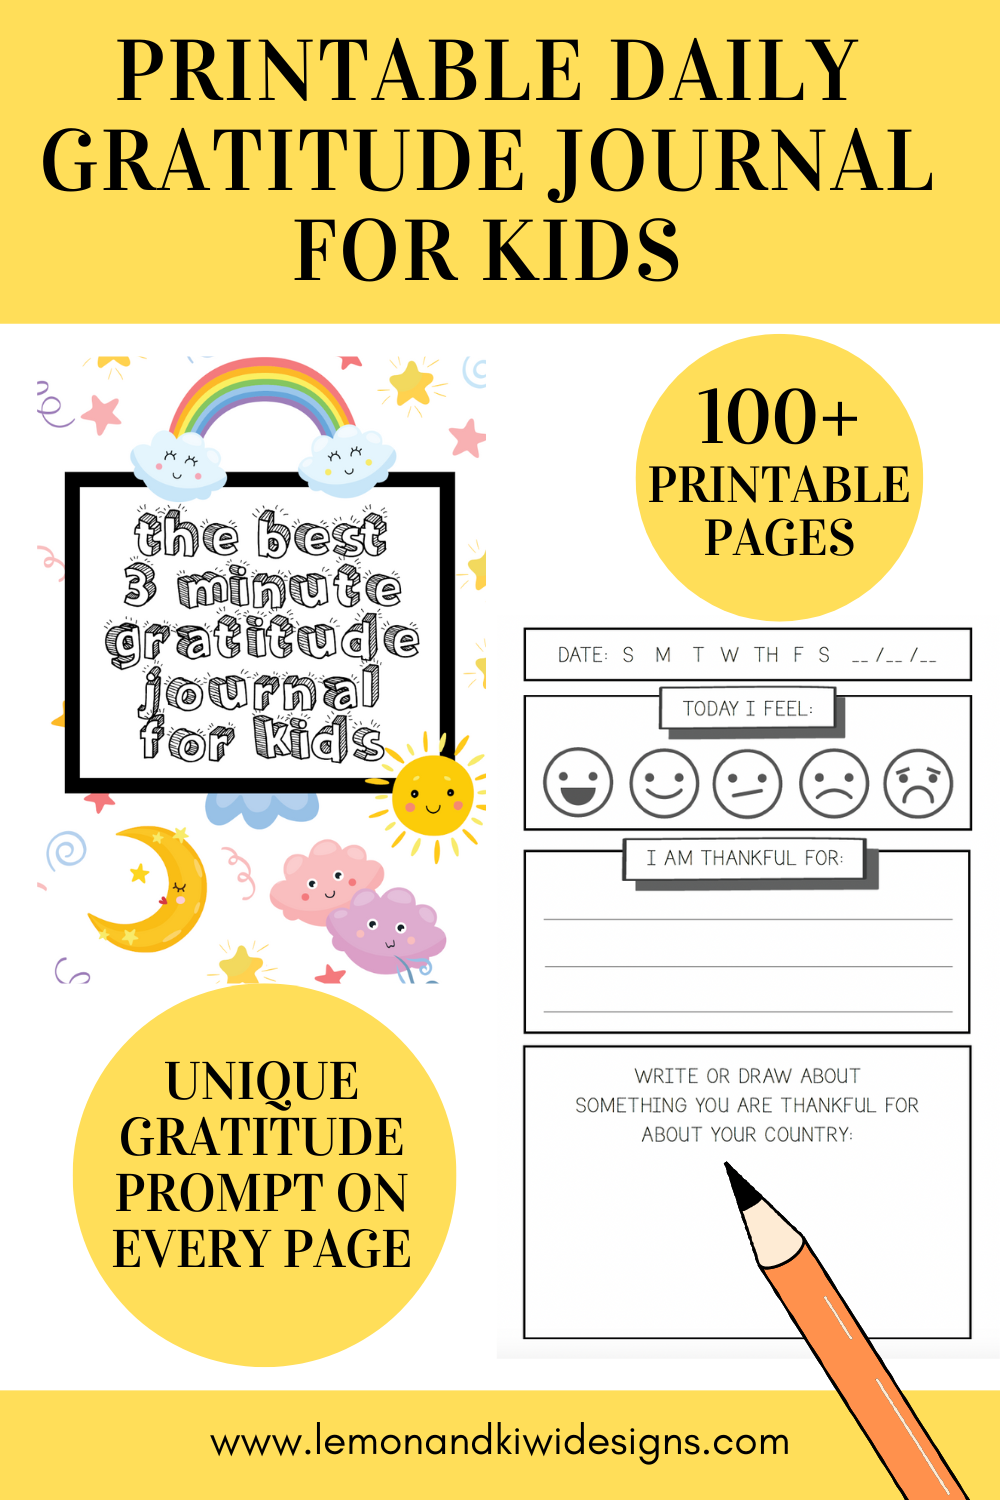 Printable Daily Gratitude Journal for Kids